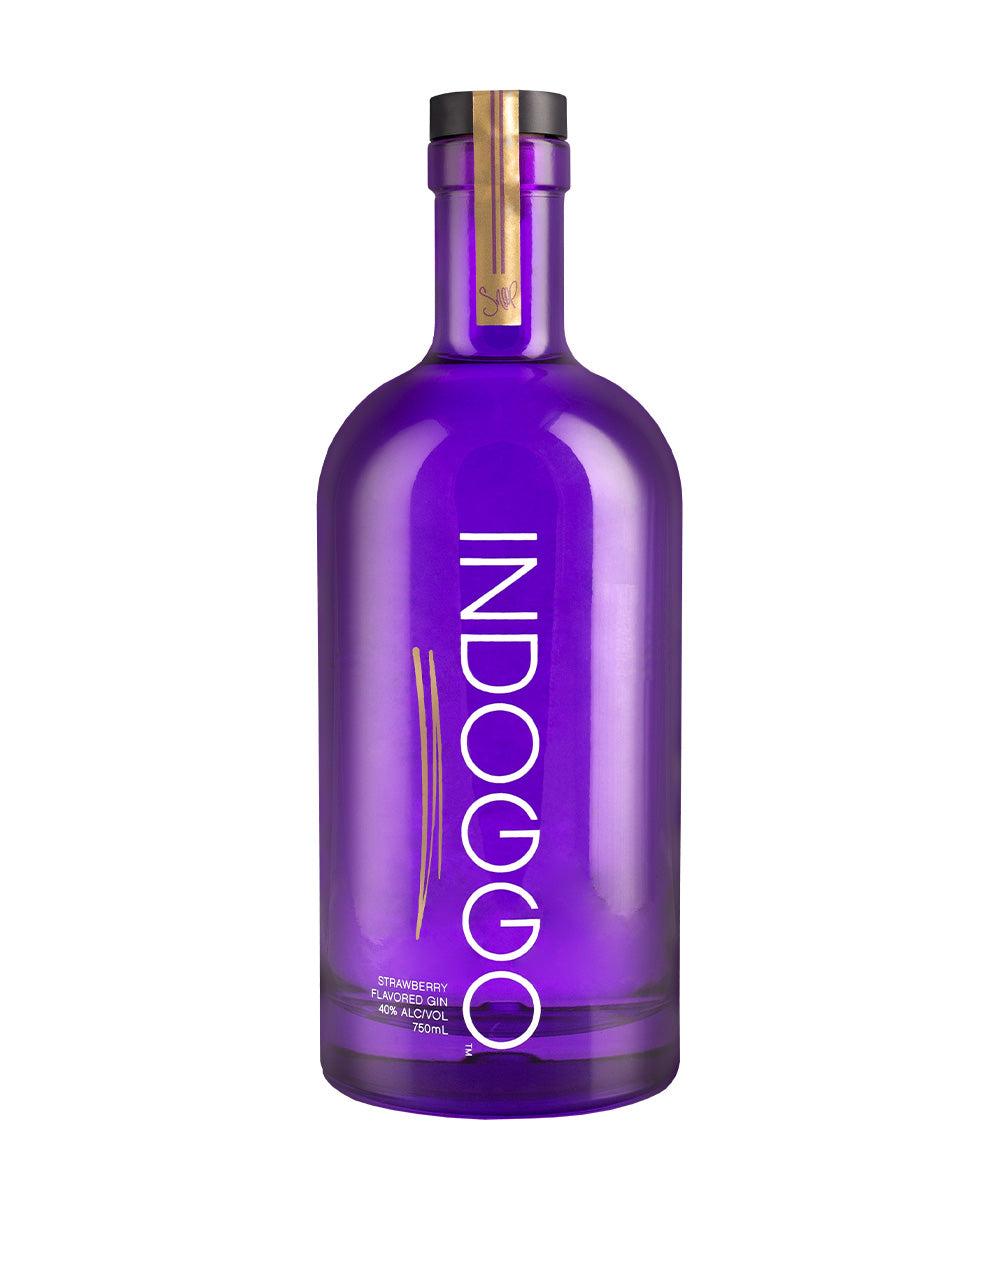 INDOGGO® Gin by Snoop Dogg